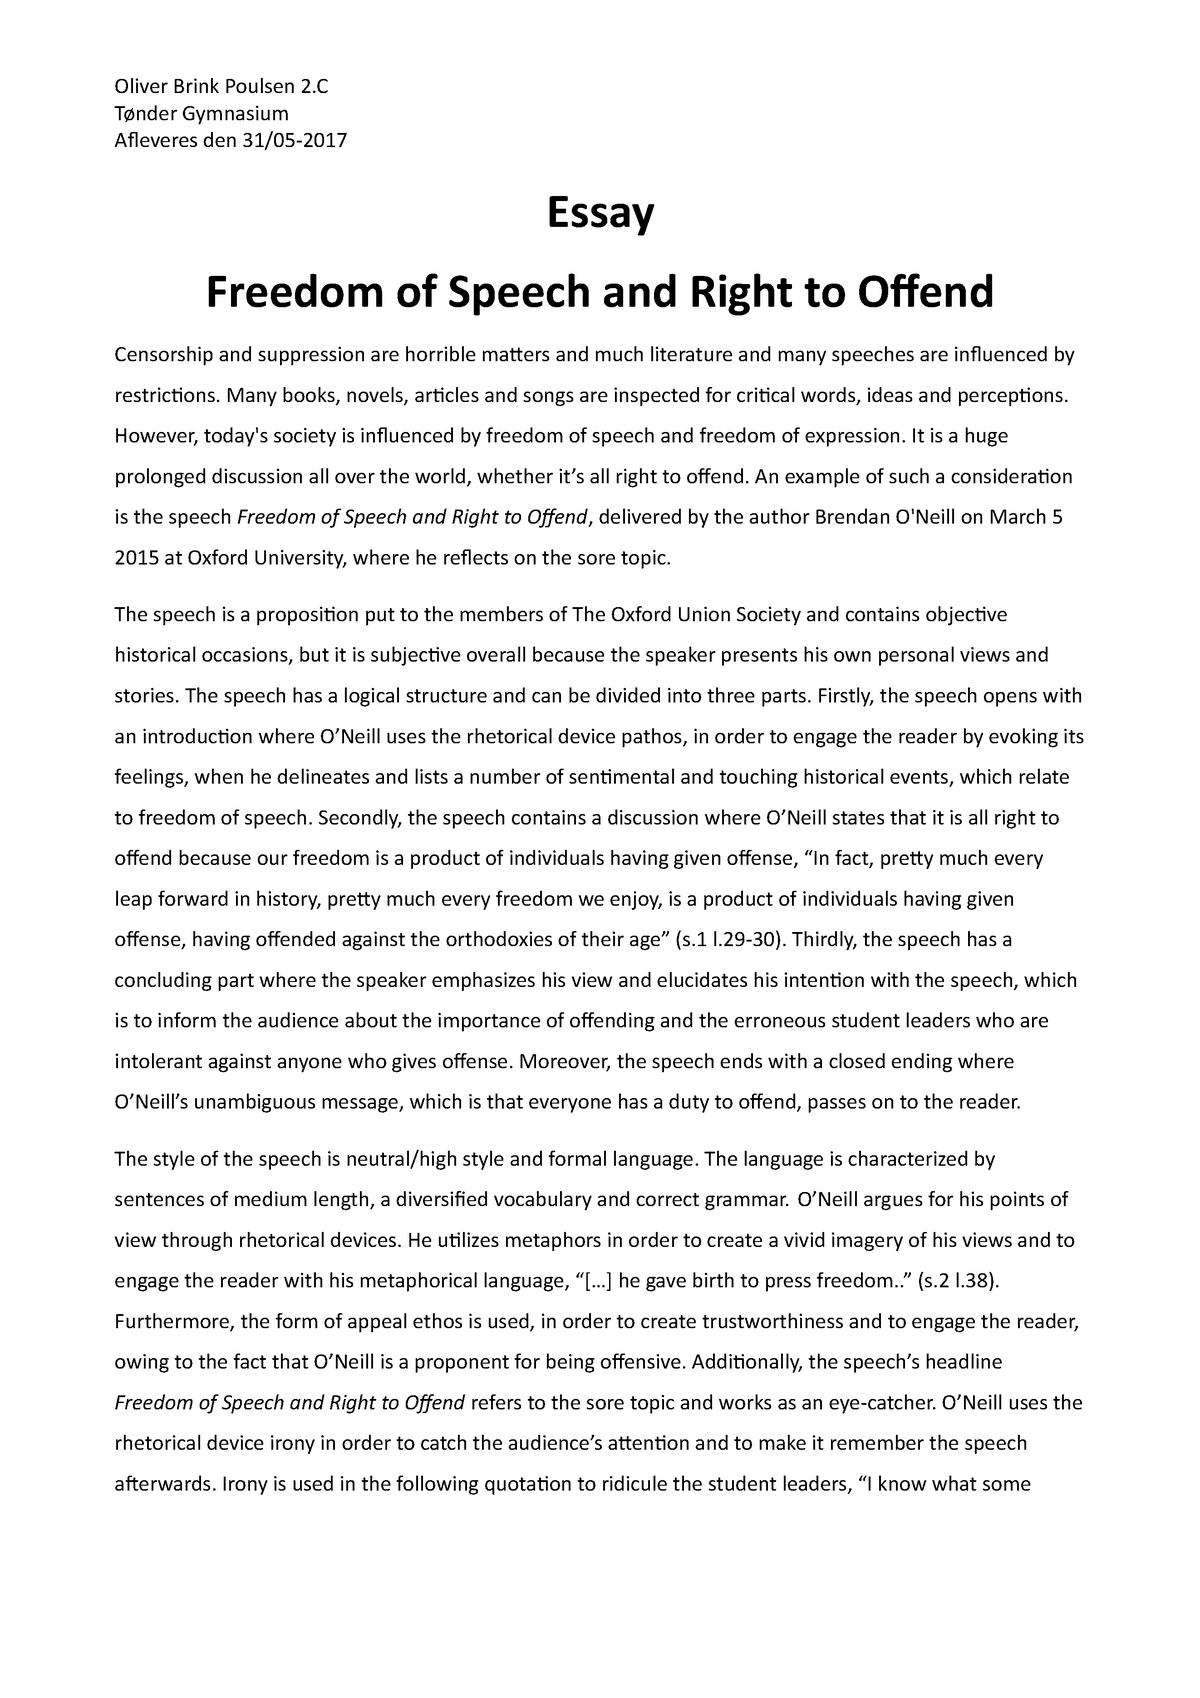 freedom of speech essay ideas